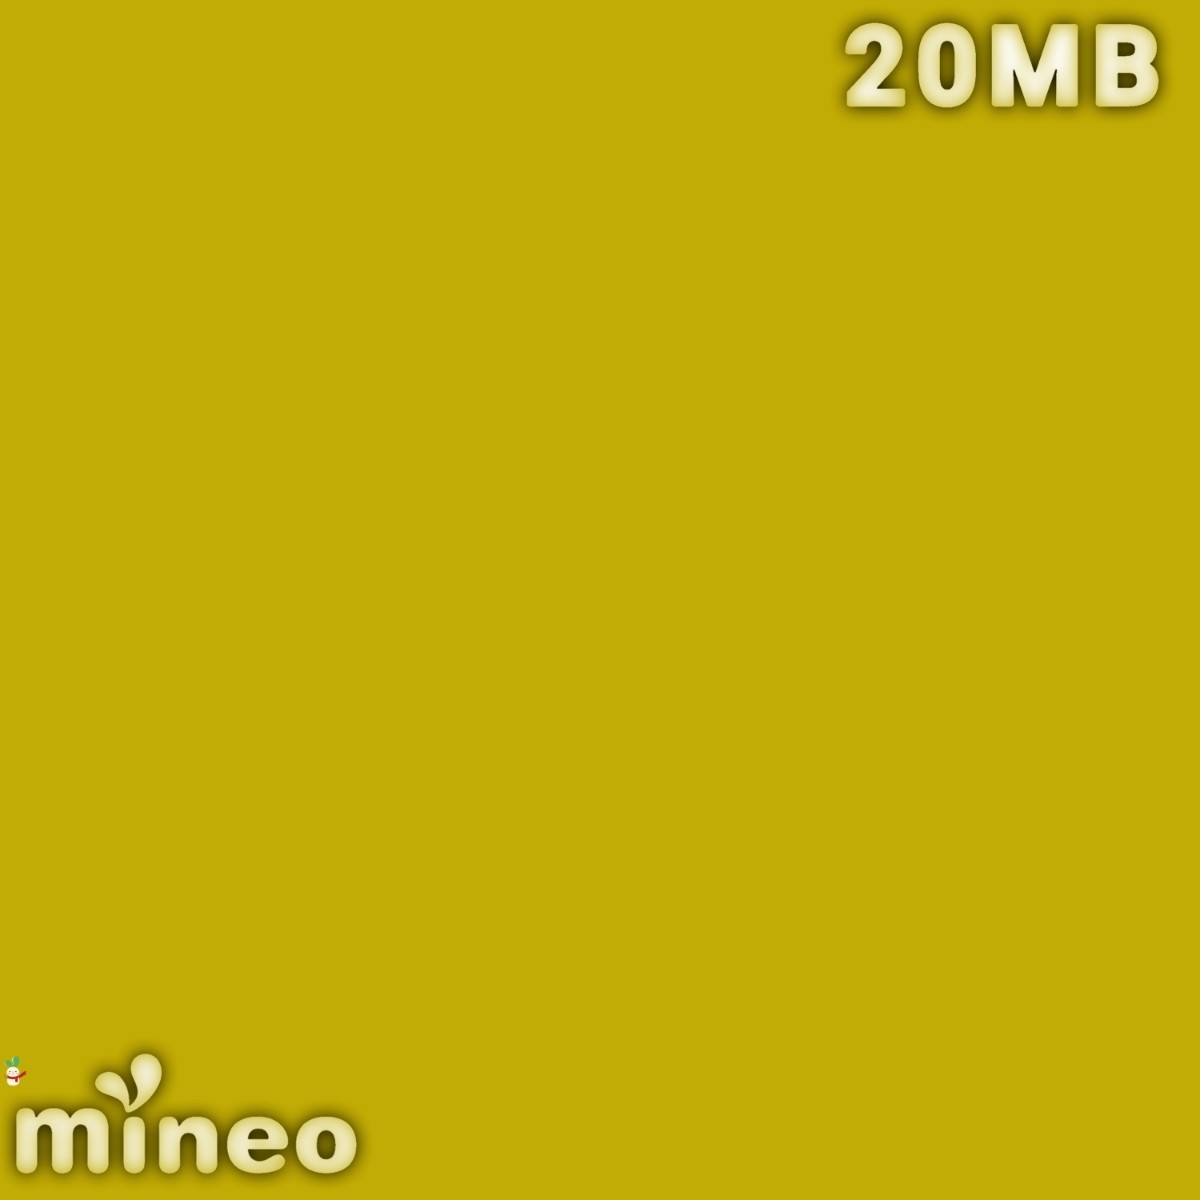 “mineo”『マイネオ パケットギフト 20MB』匿名 即決 送料無料 折り返し評価 リピOK 制限OFF『Antique Gold』画像データ HEX[#f7b977]/Ⅰ_画像1